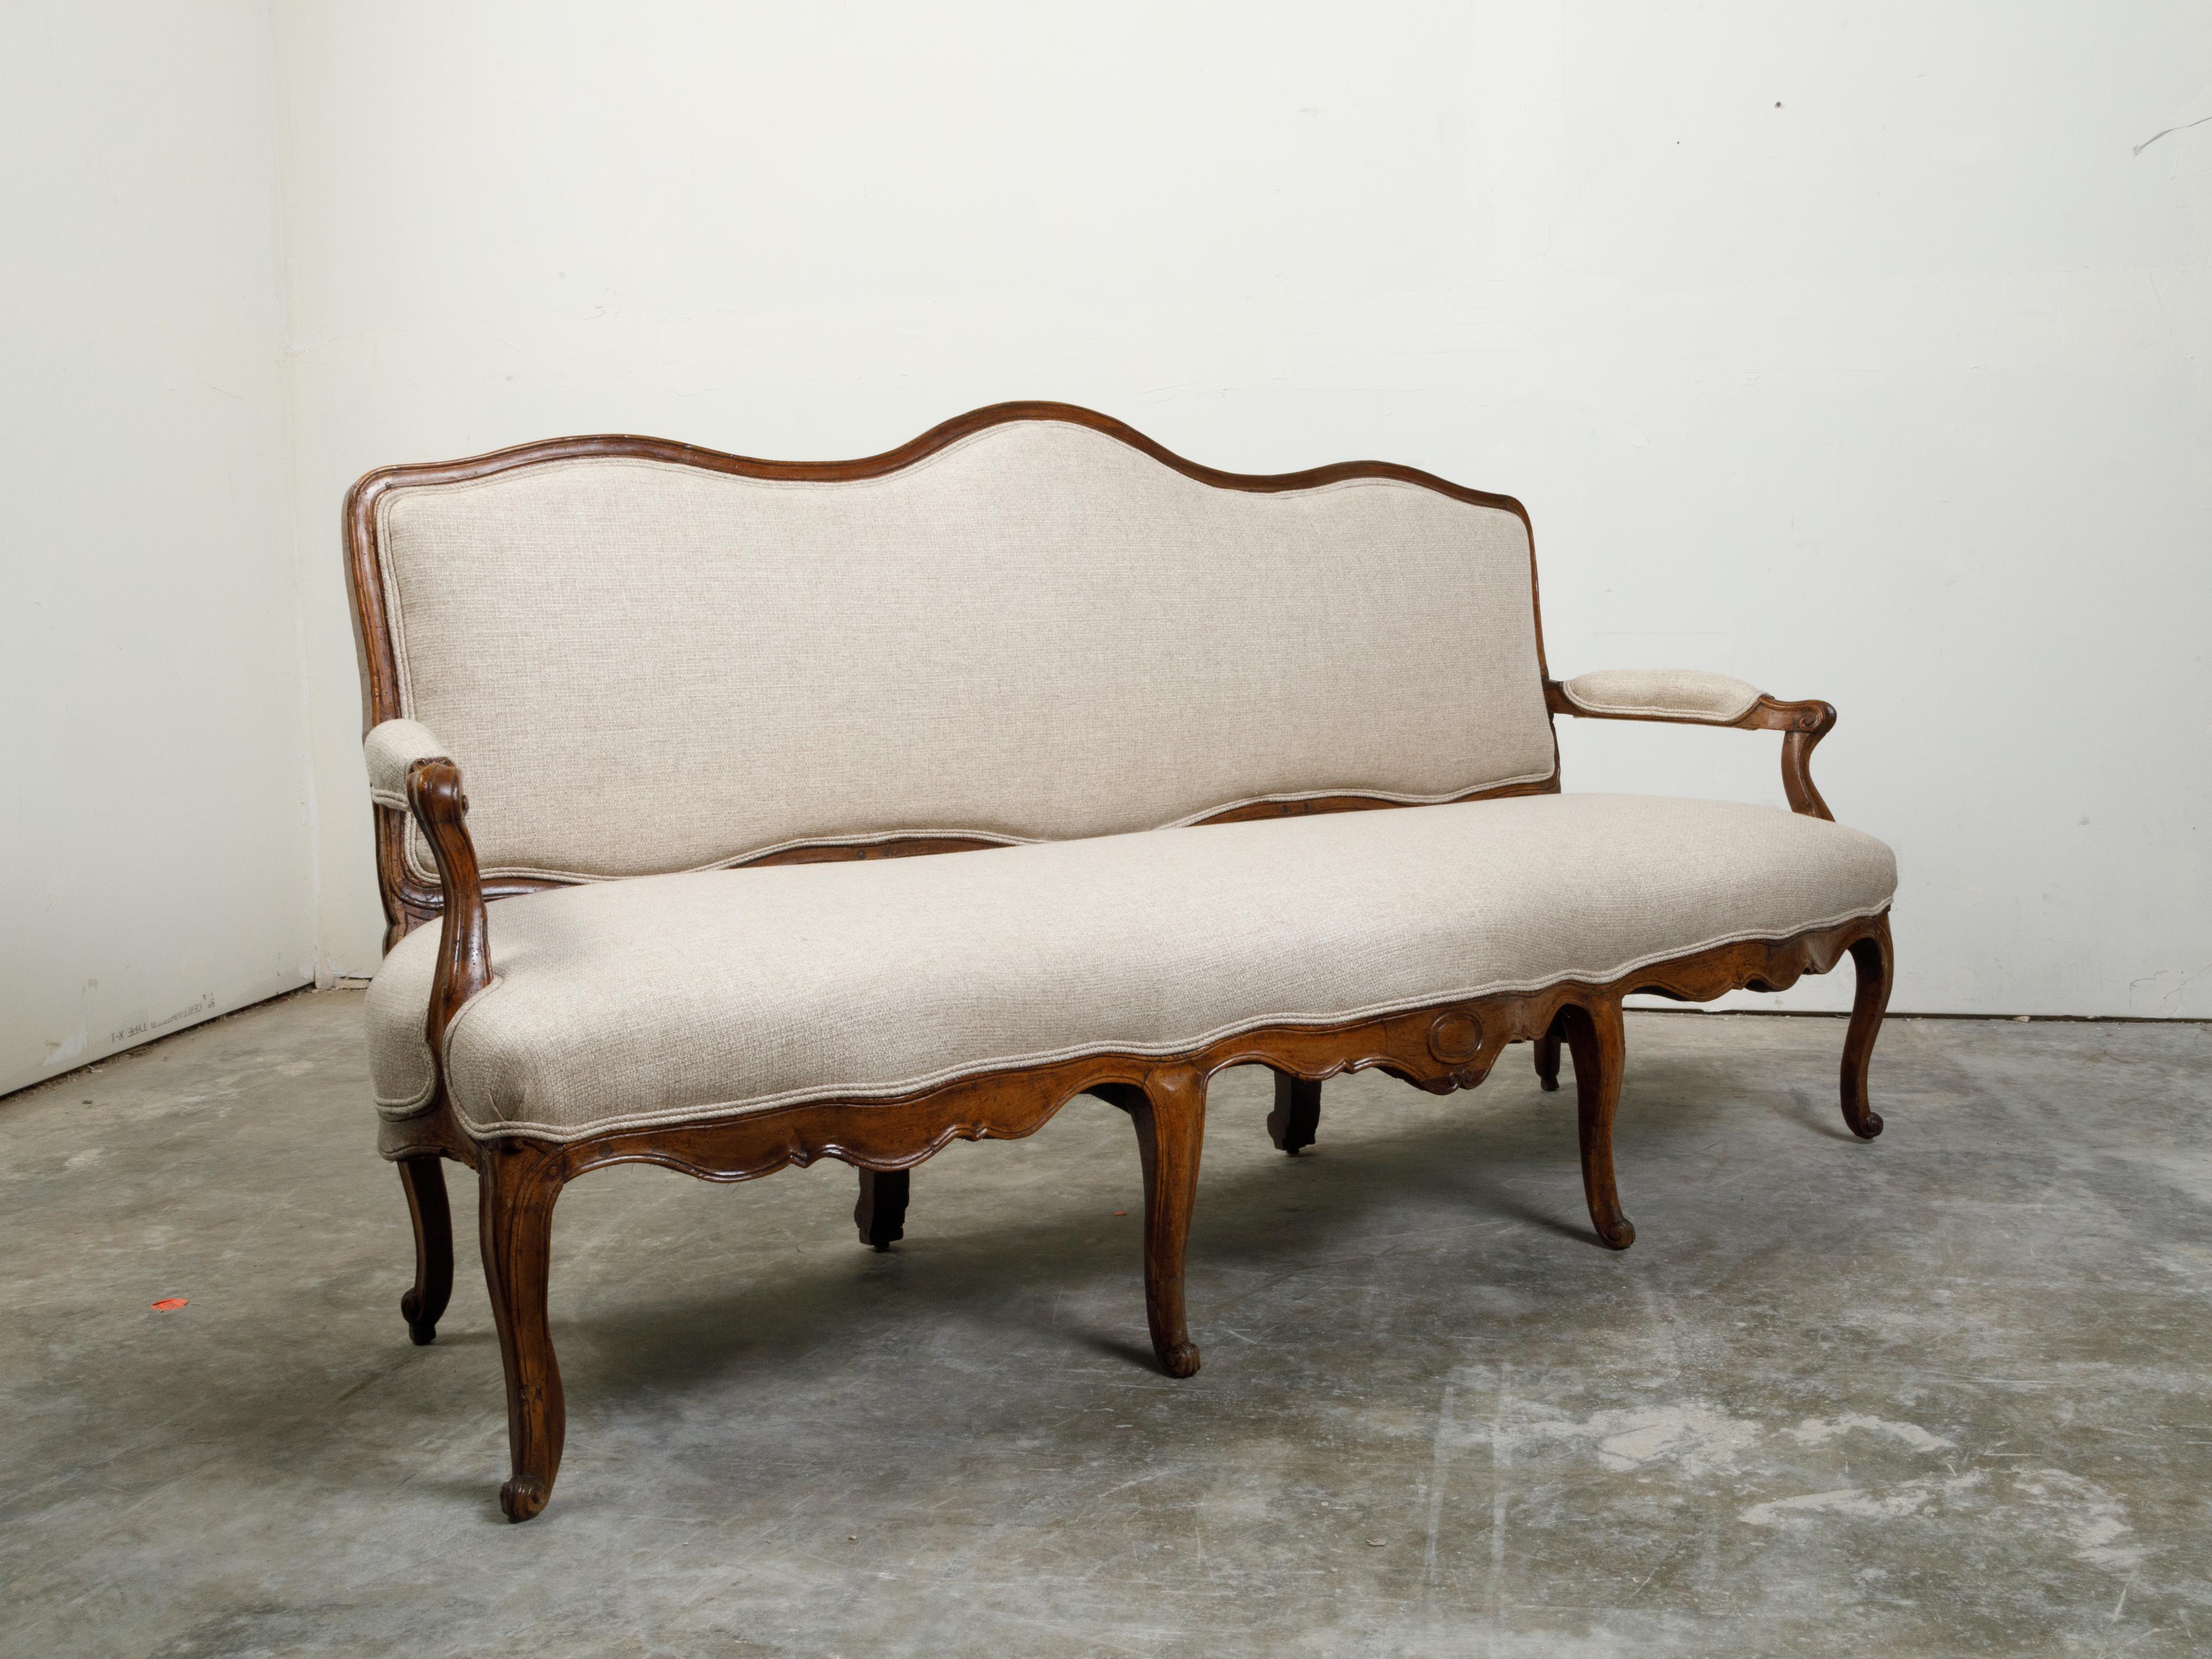 Italian 18th Century Rococo Walnut Sofa with Cabriole Legs and New Upholstery 2